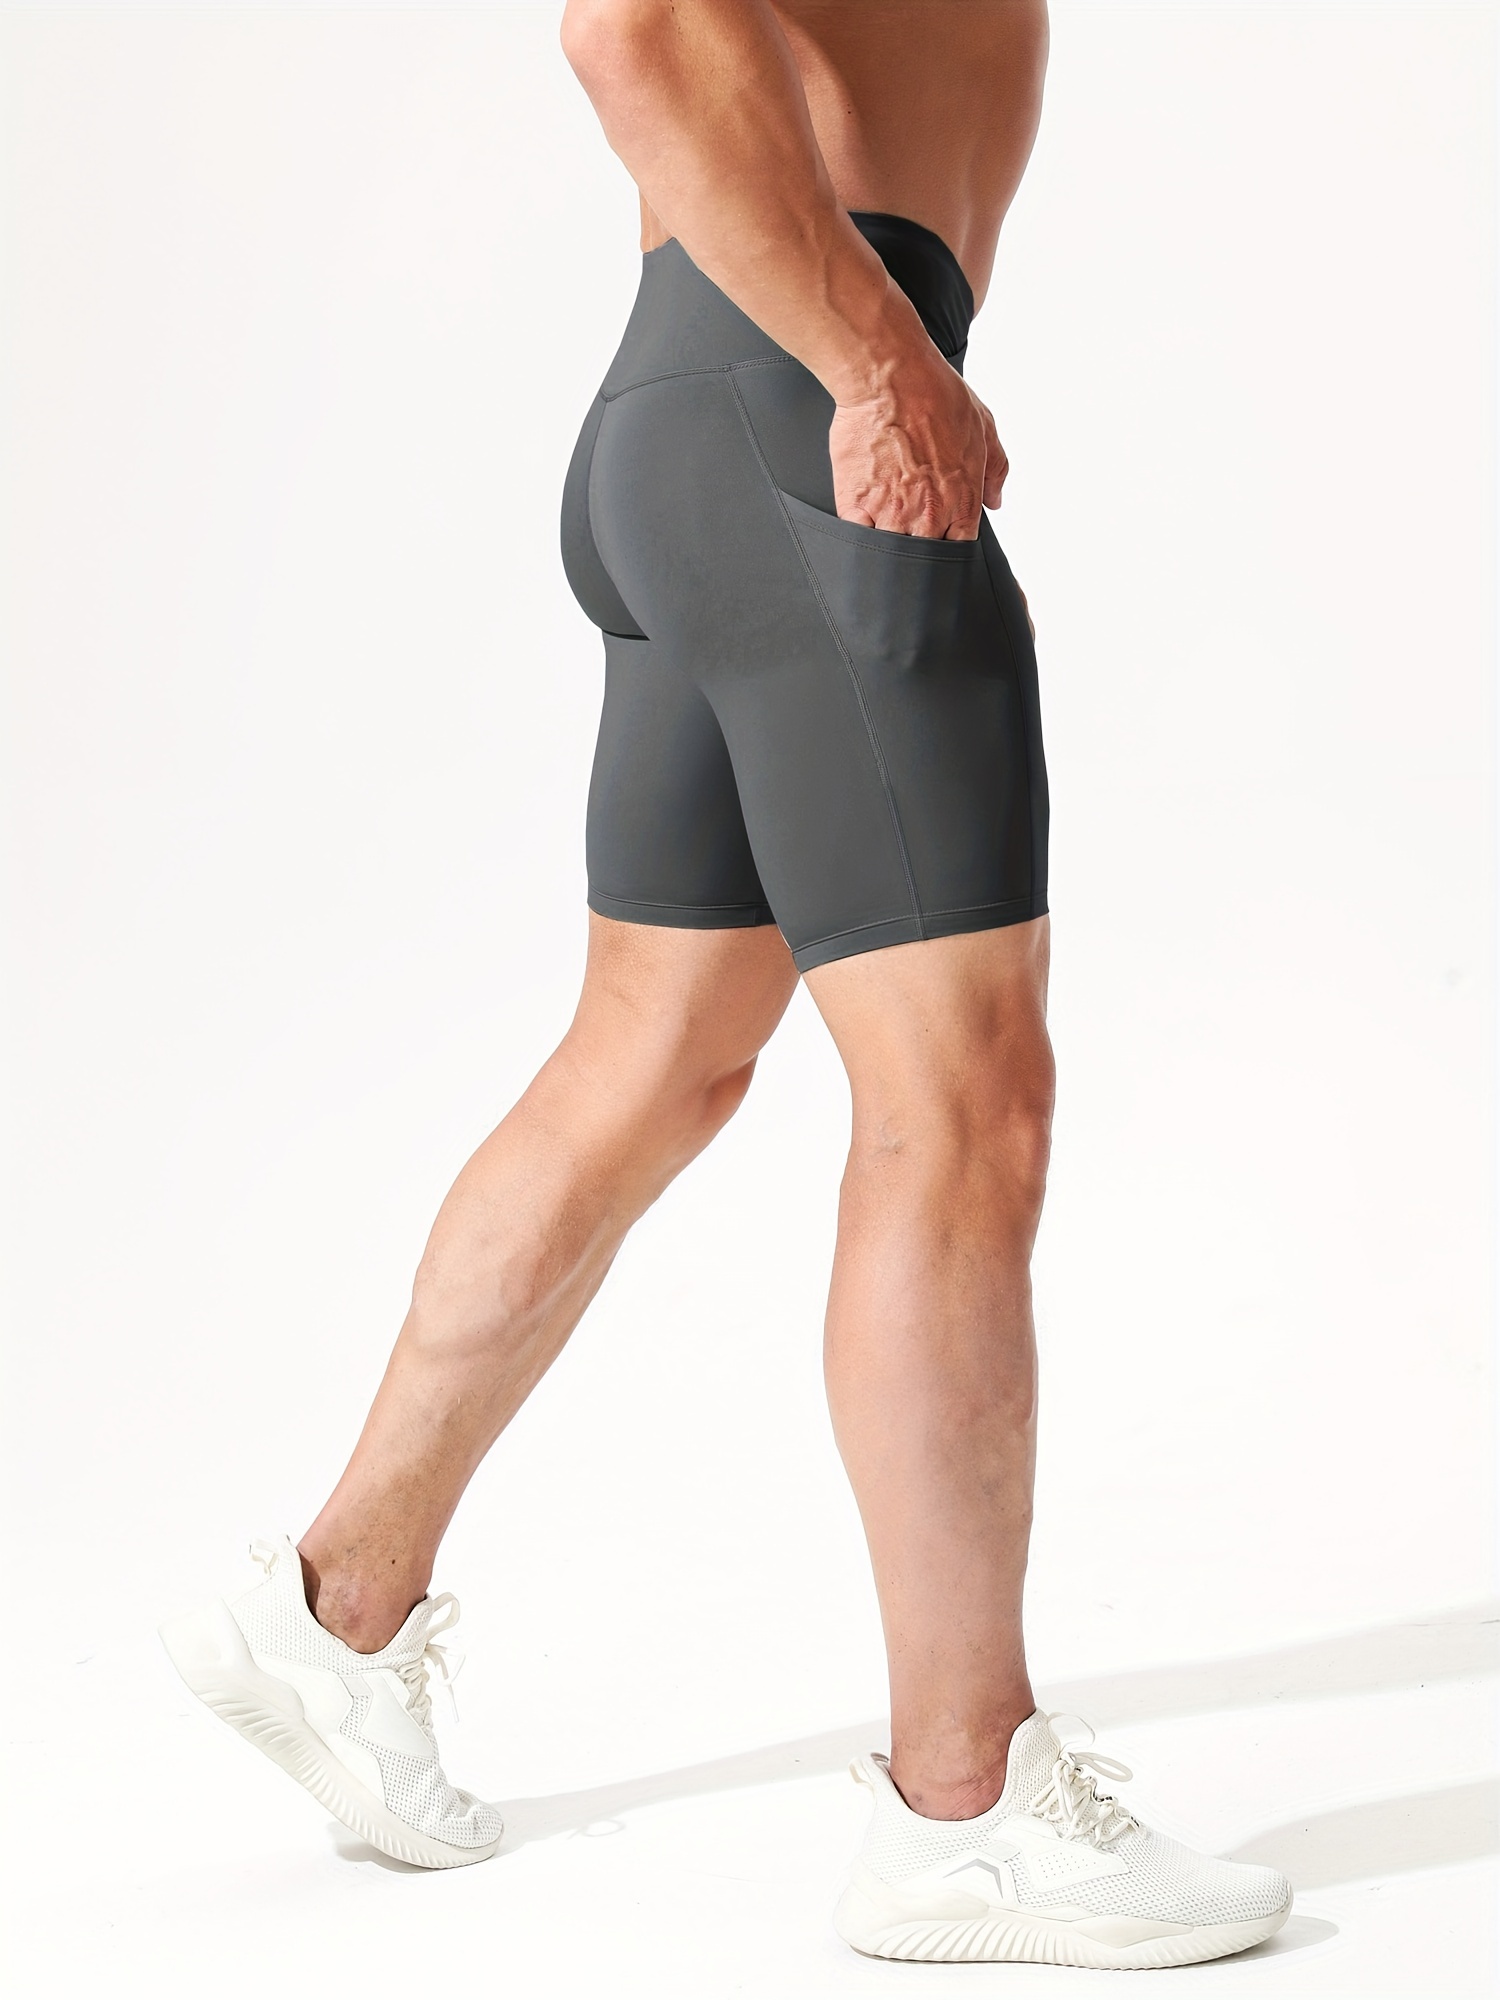 Men Compression Fitness Knee High Shorts Slim Fit/Fashion/Sports